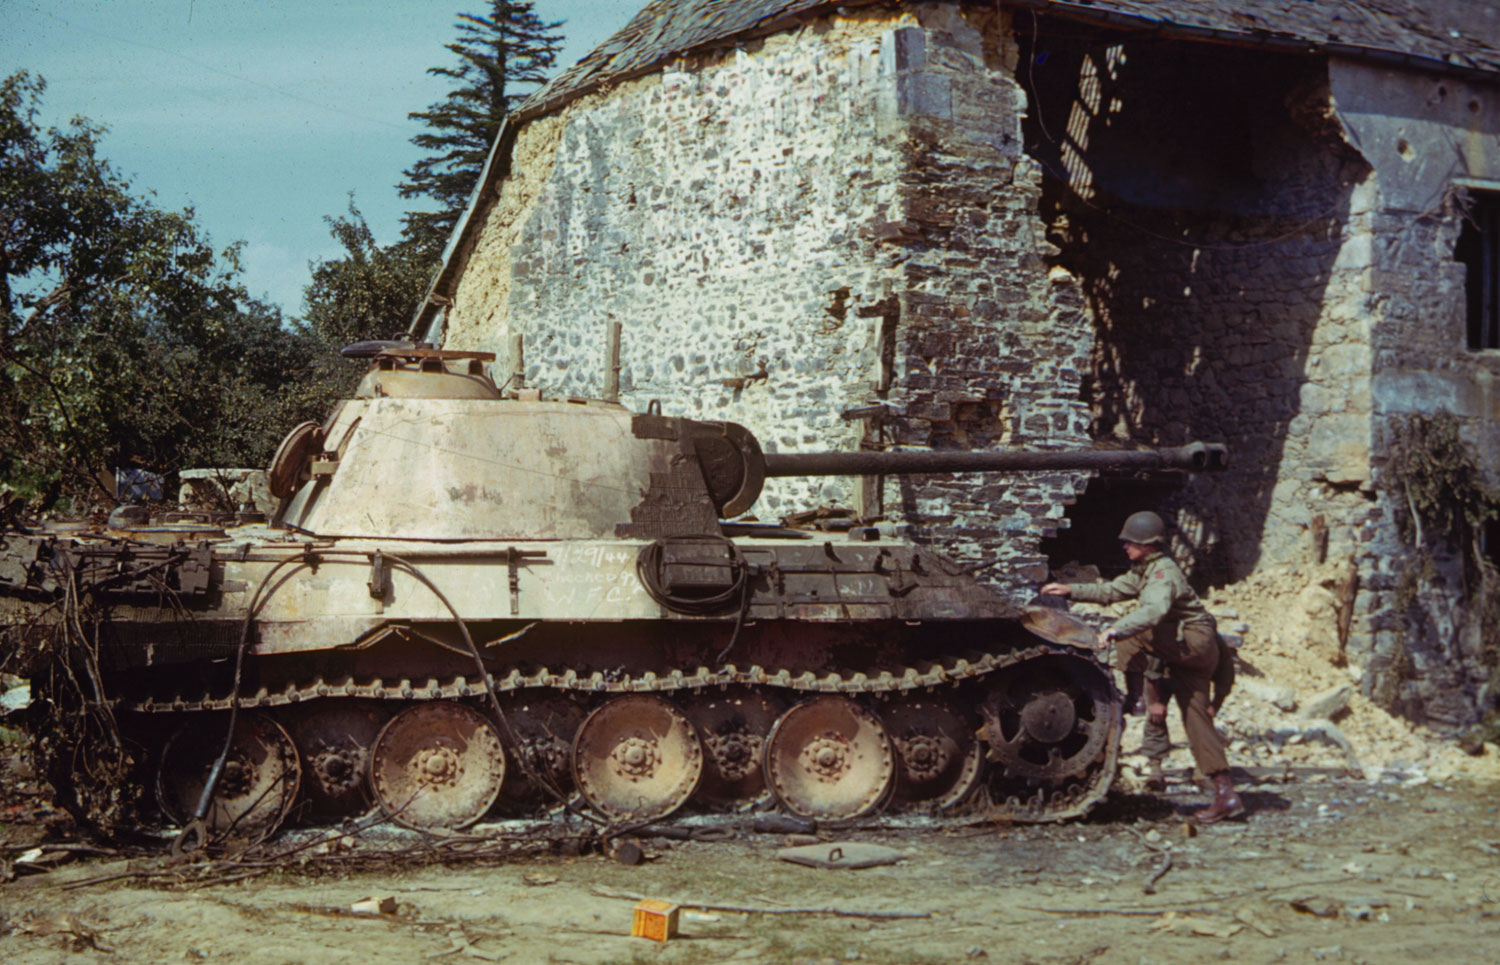 Ruined tank near St. Gilles (or perhaps Hambye), France, 1944.